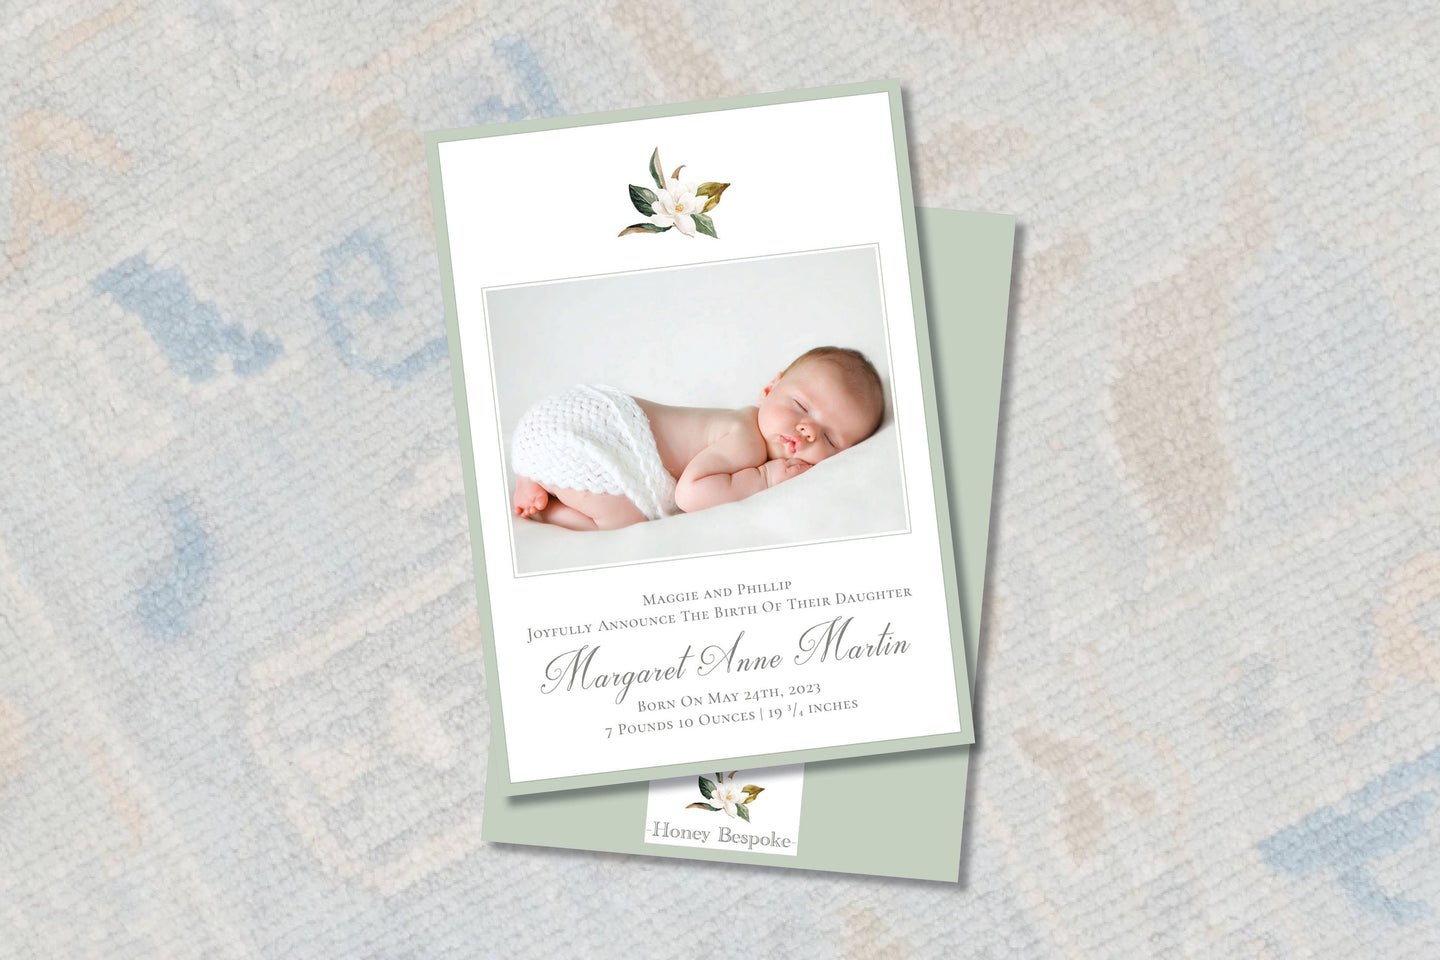 Watercolor Magnolia Flower Baby Birth Announcement / Personalized Magnolia Baby Announcement / Printable / Girl / Invitation / Preppy